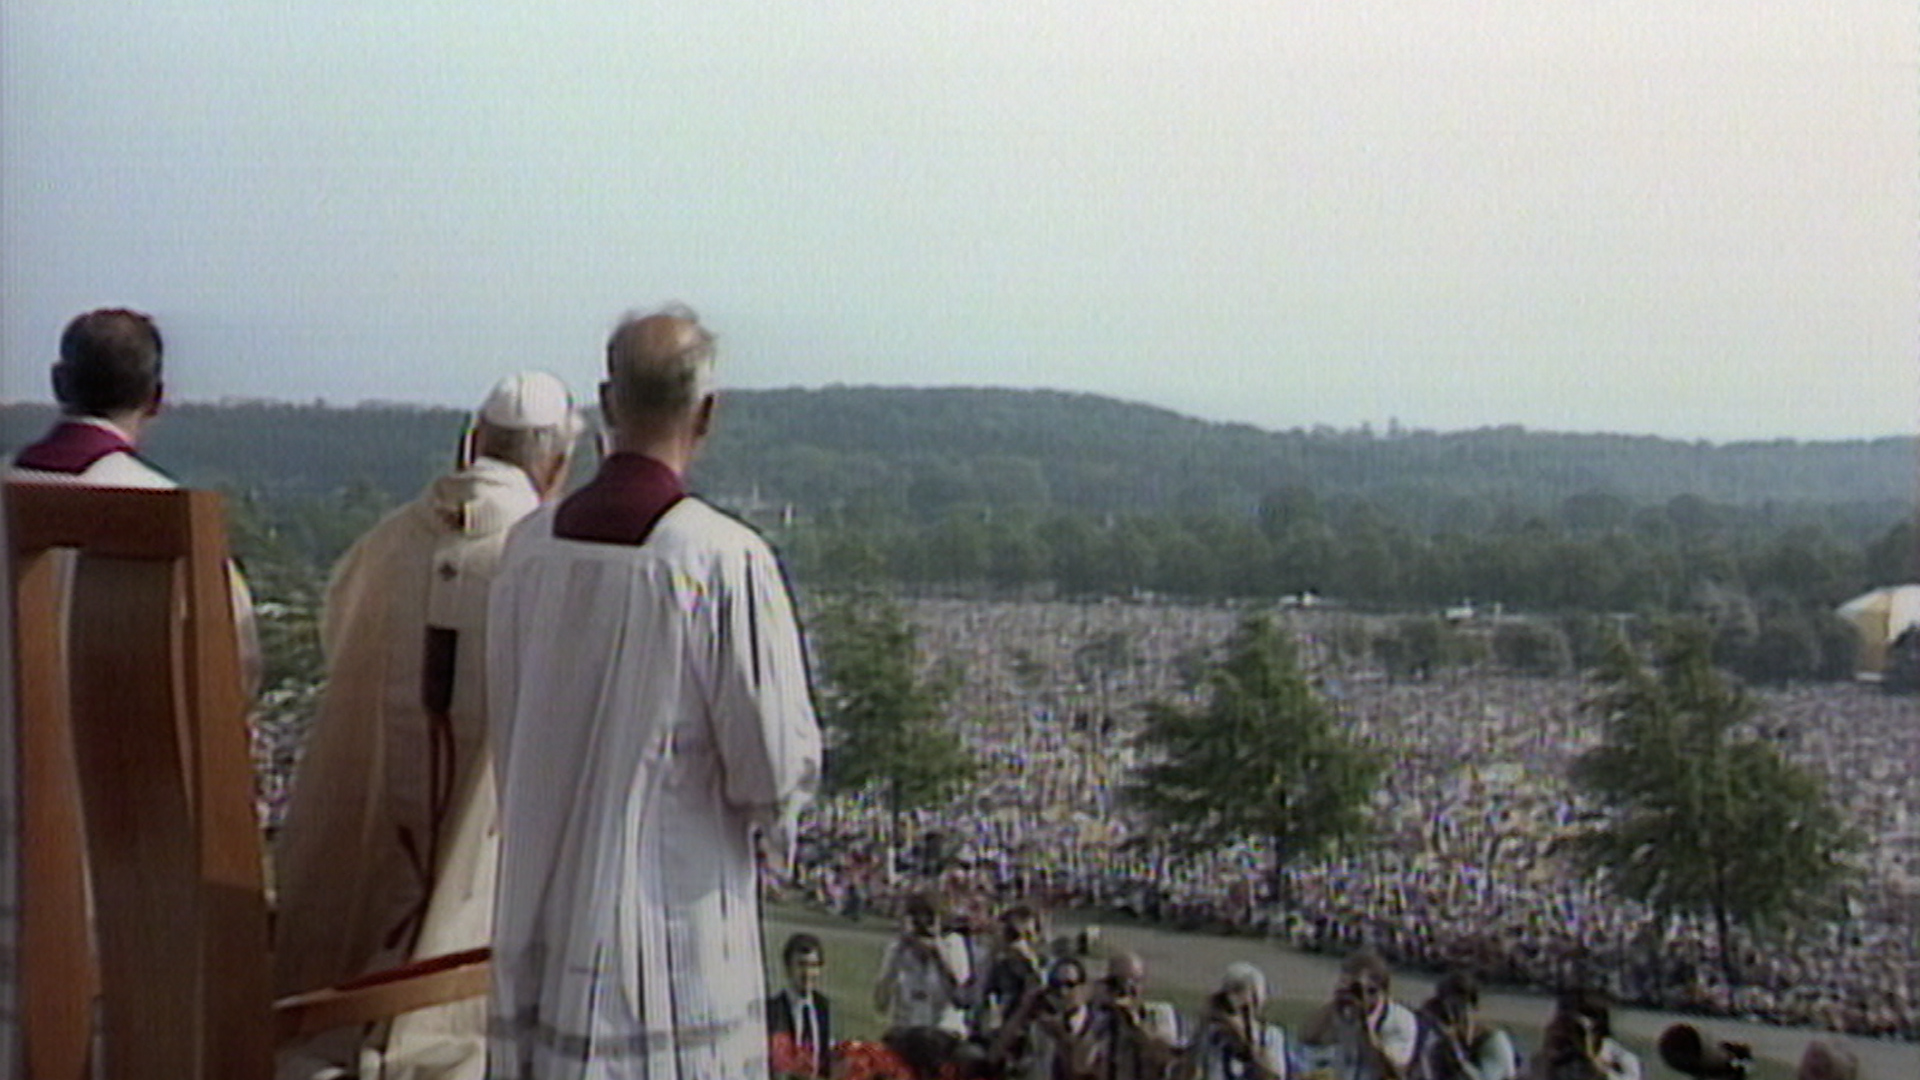 John Paul II had to wait seven minutes before he could speak.